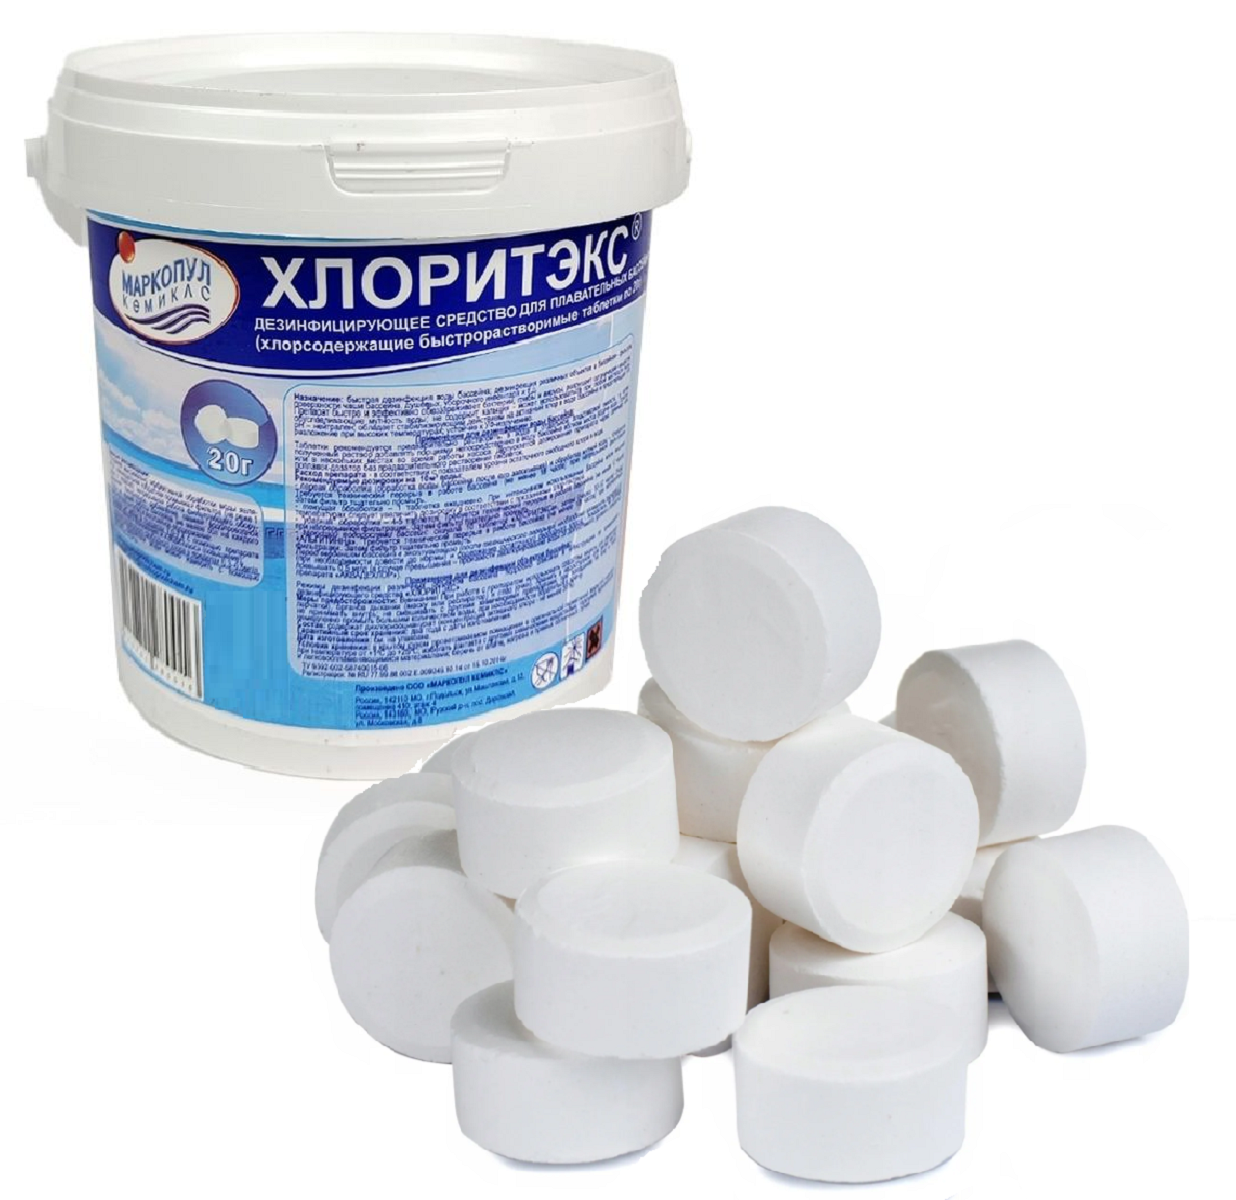 Хлор для бассейна Хлоритэкс 0.8 кг, таблетки для очистки воды Маркопул кемиклс